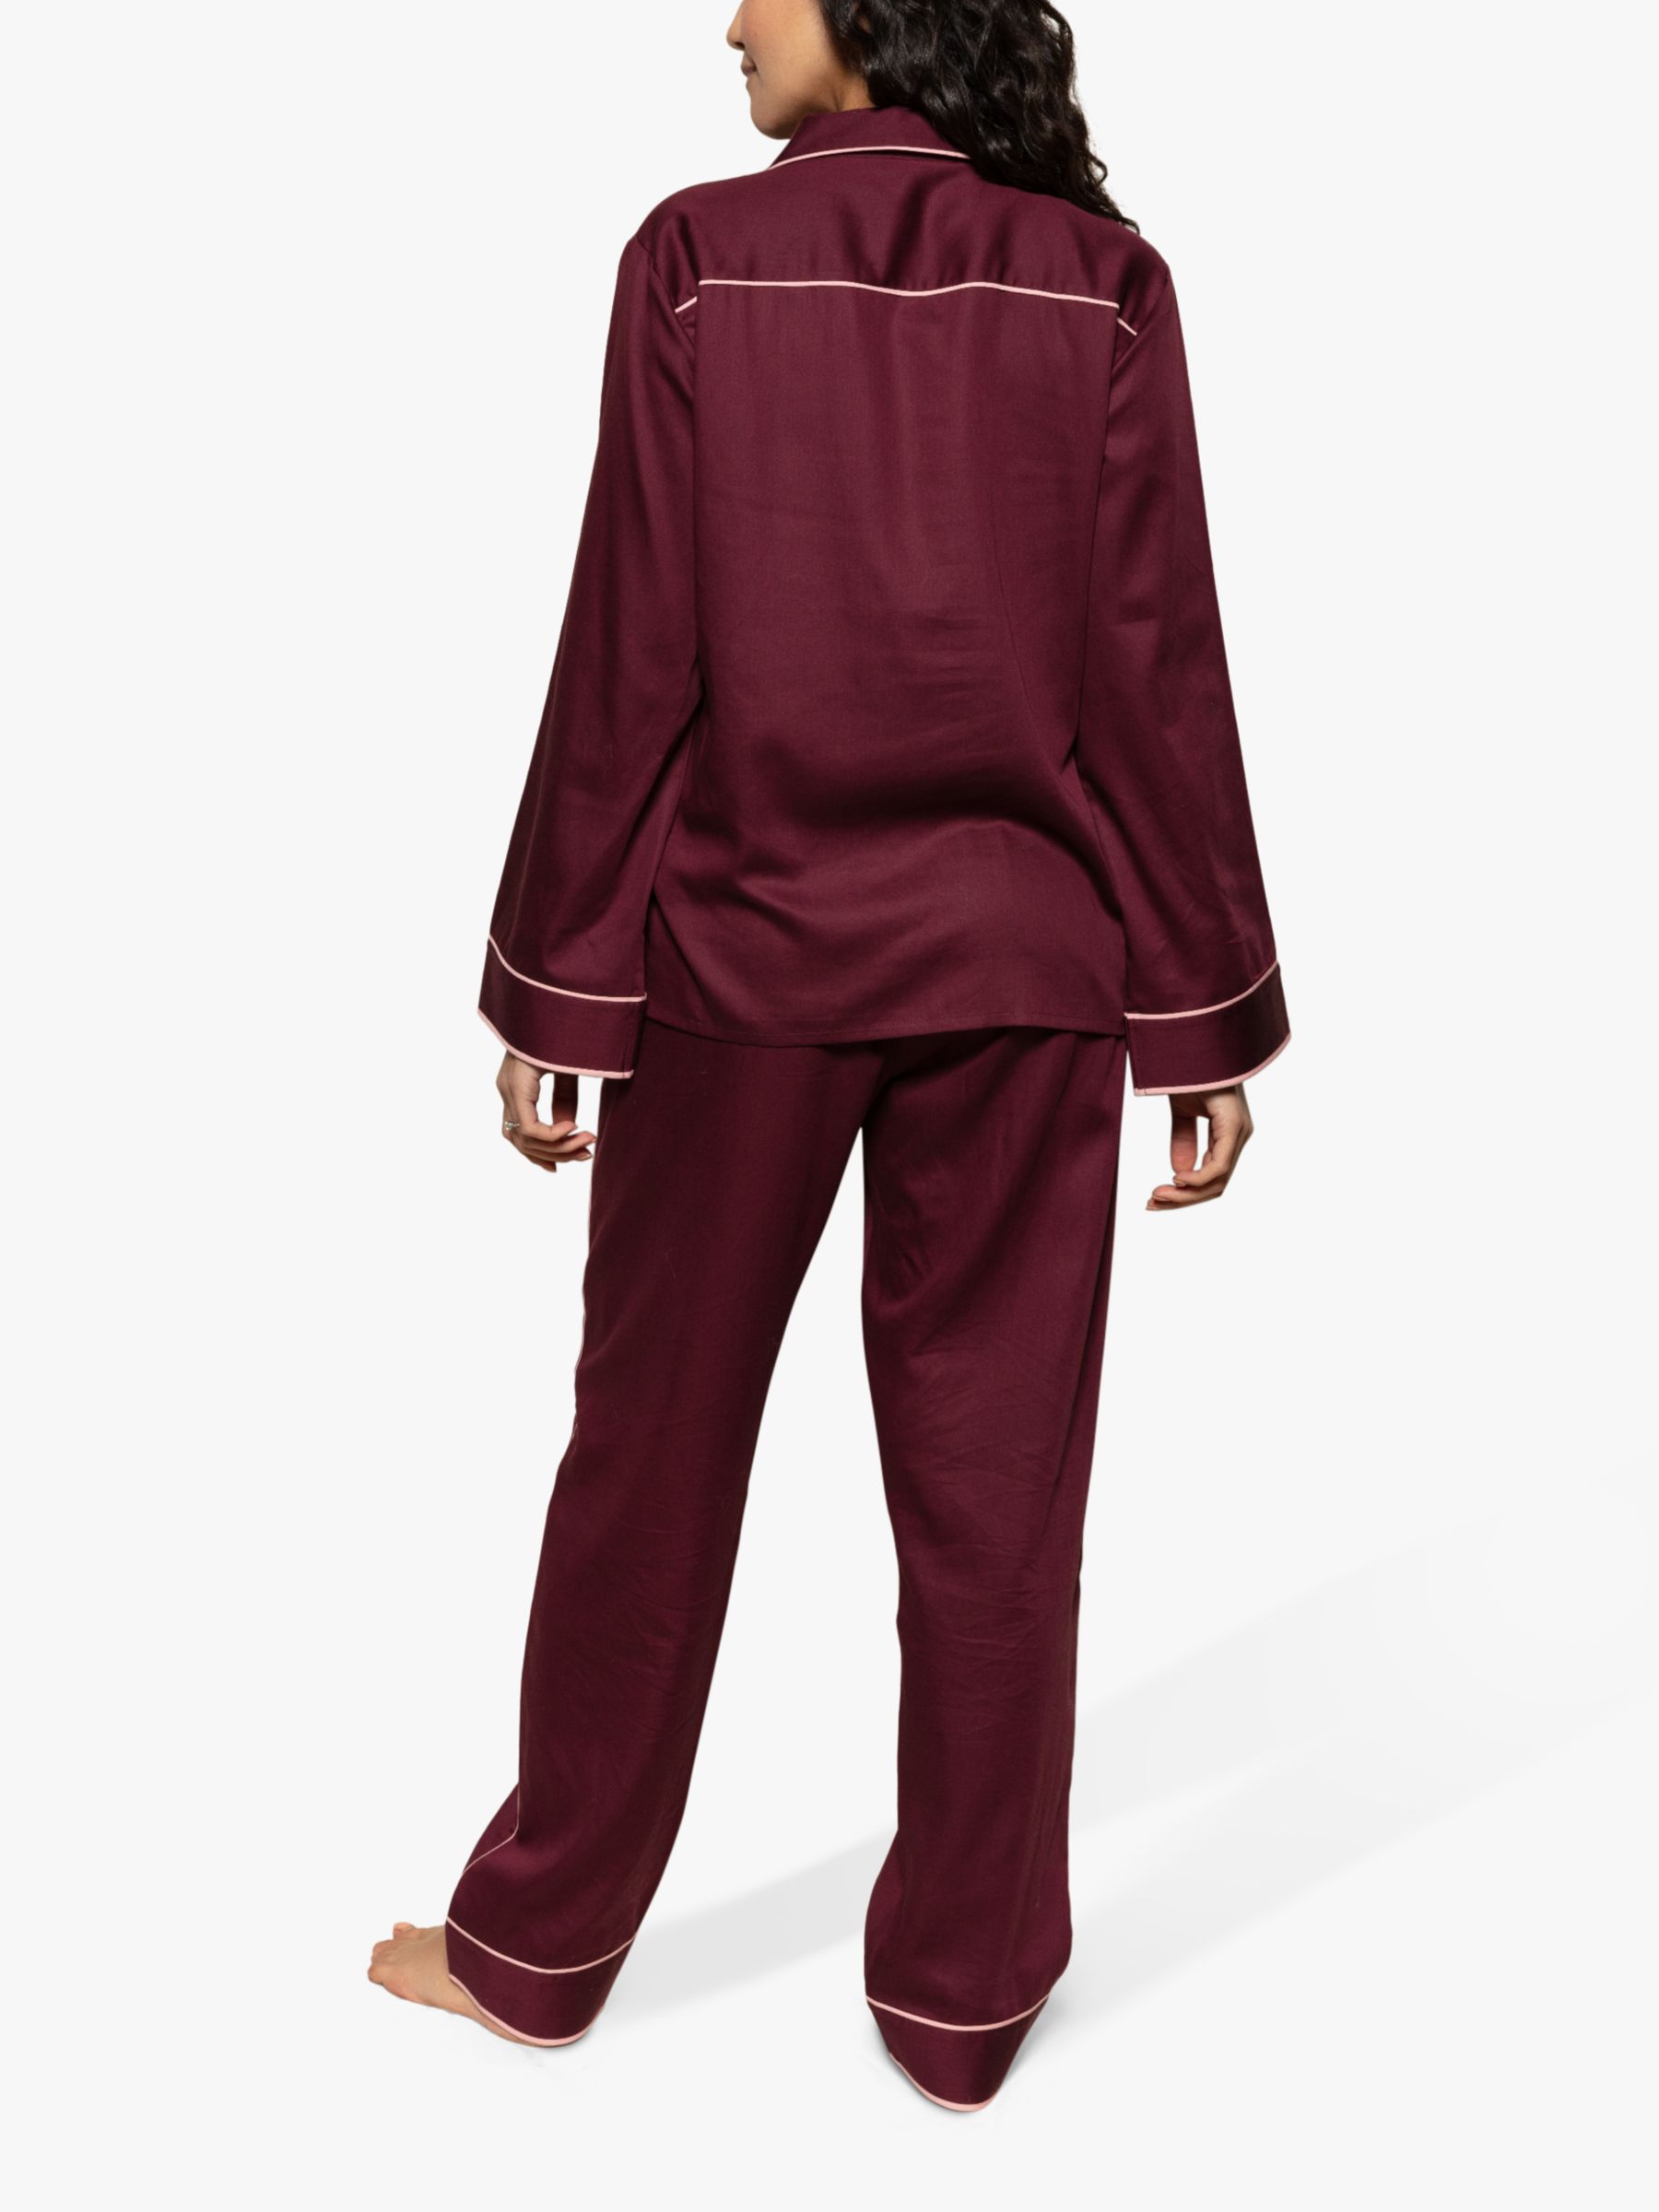 Buy Fable & Eve Piccadilly Pyjama Set, Burgundy Online at johnlewis.com